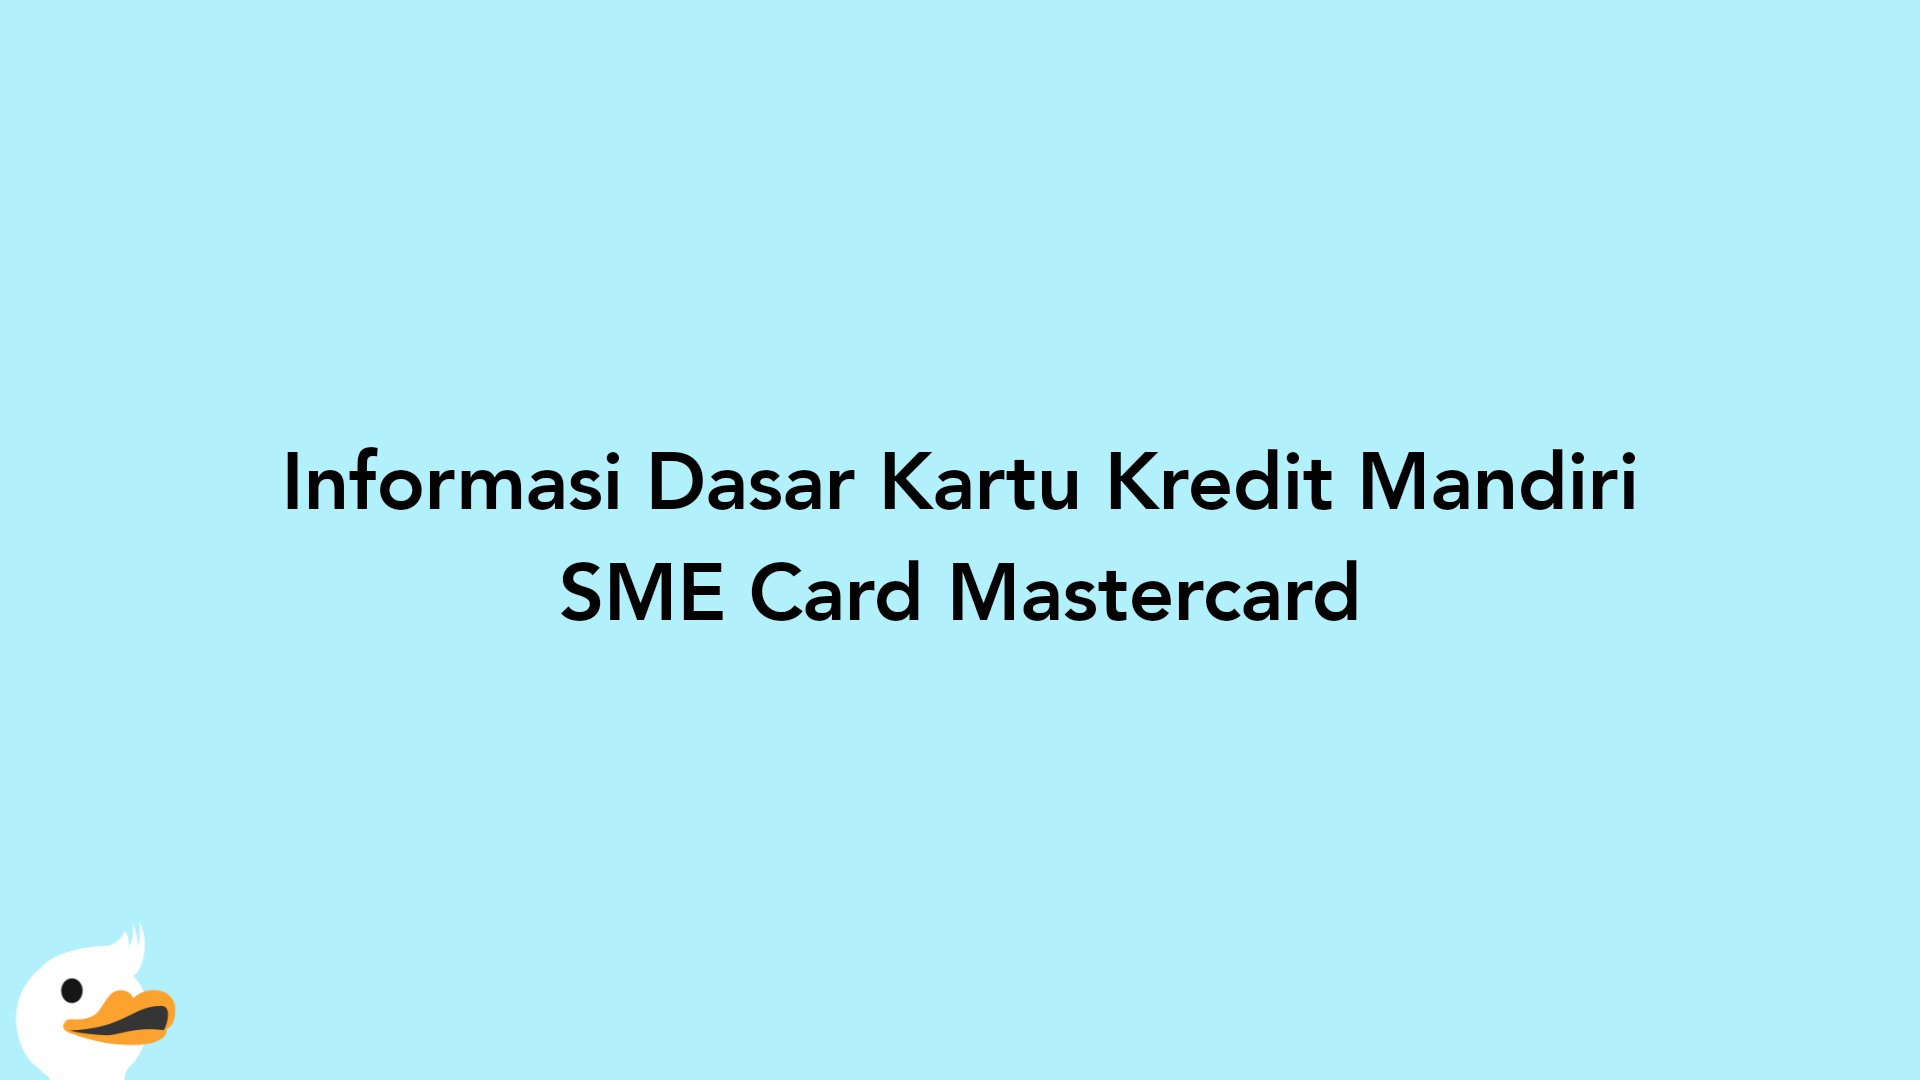 Informasi Dasar Kartu Kredit Mandiri SME Card Mastercard